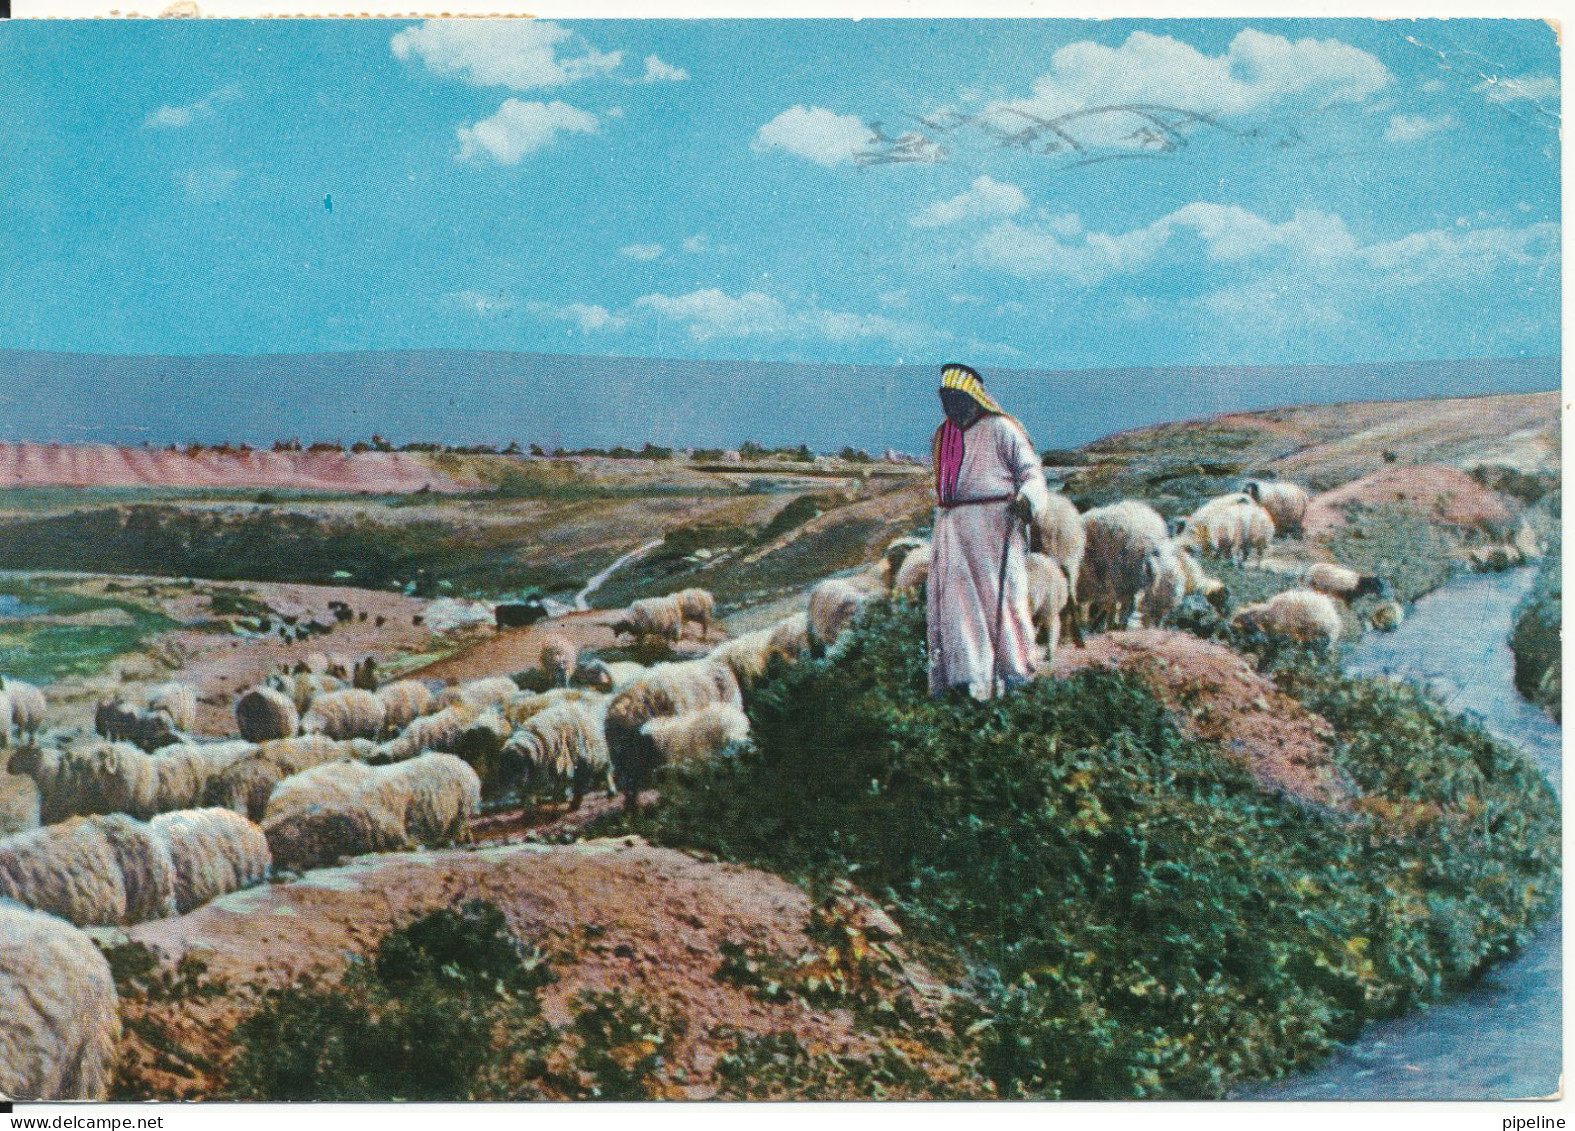 Lebanon Postcard Sent To Denmark 10-7-1966 (The Good Shepherd Near Flowing Water) Weak Right Upper Corner - Liban